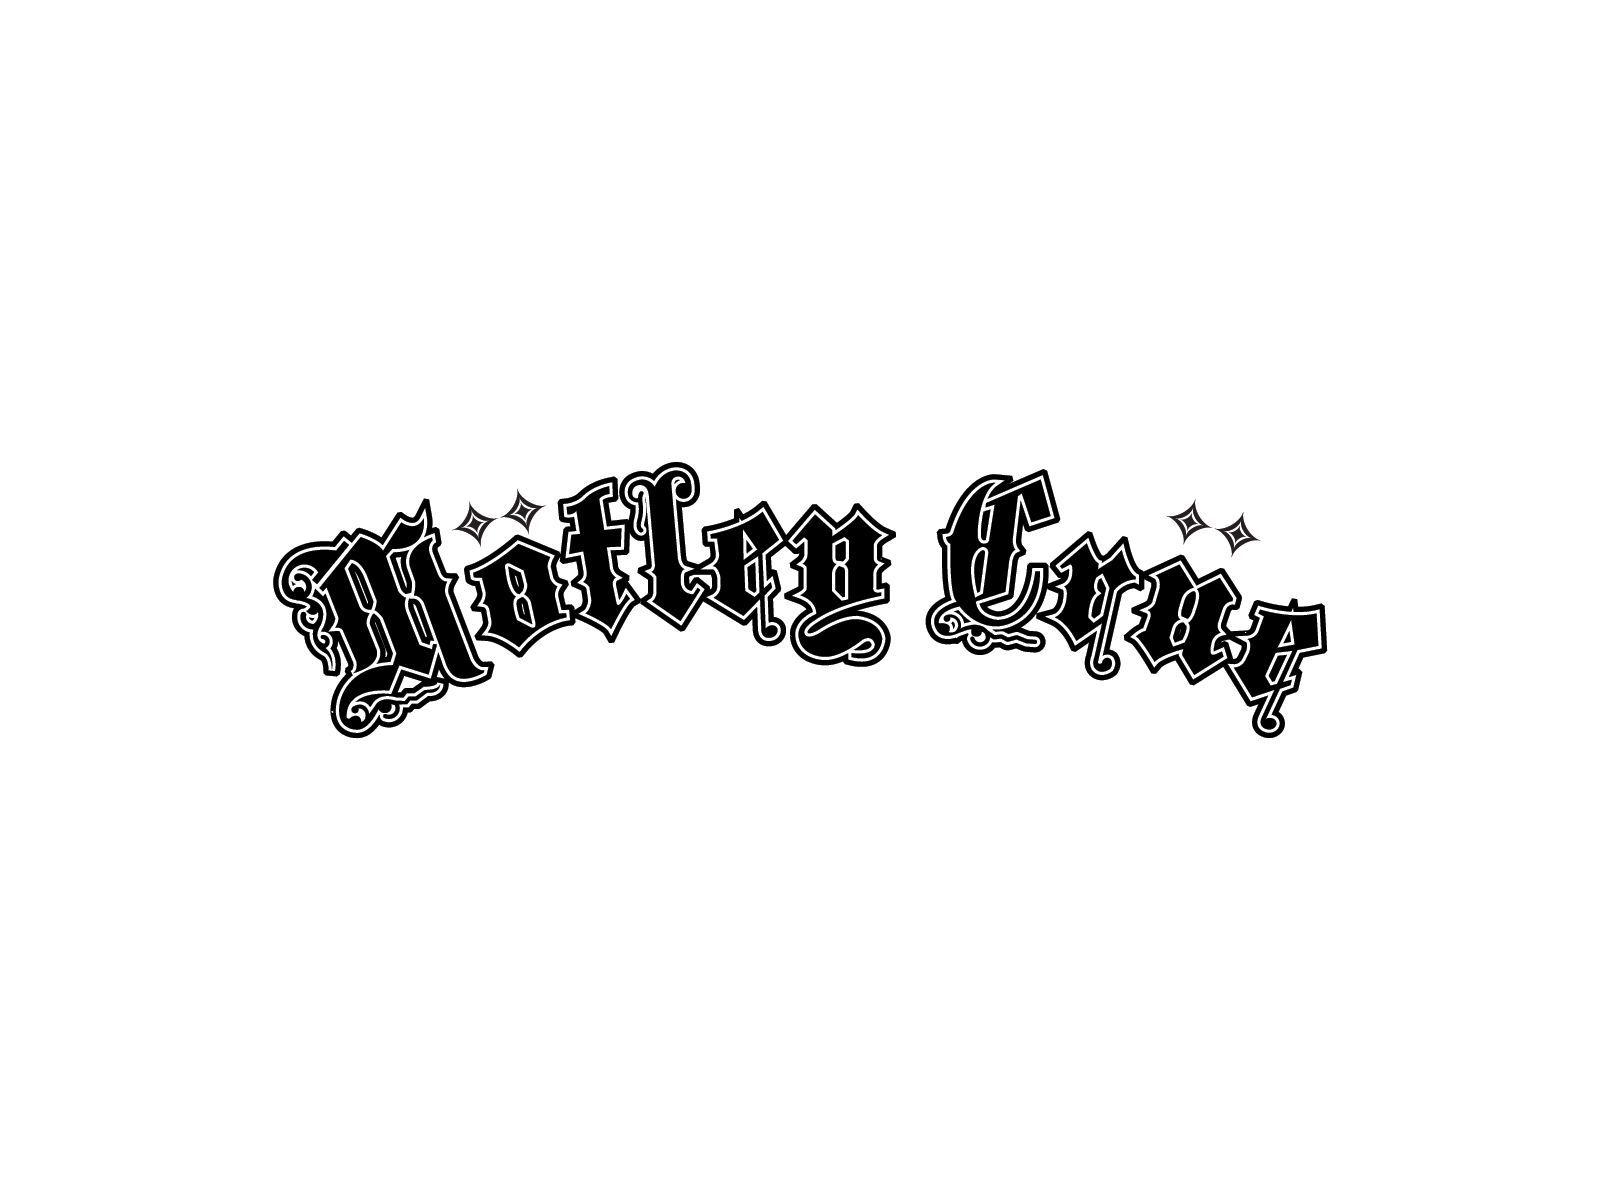 Motley Crue Logo - Motley Crue logo and wallpaper. Motley Crue. Band logos, Rock